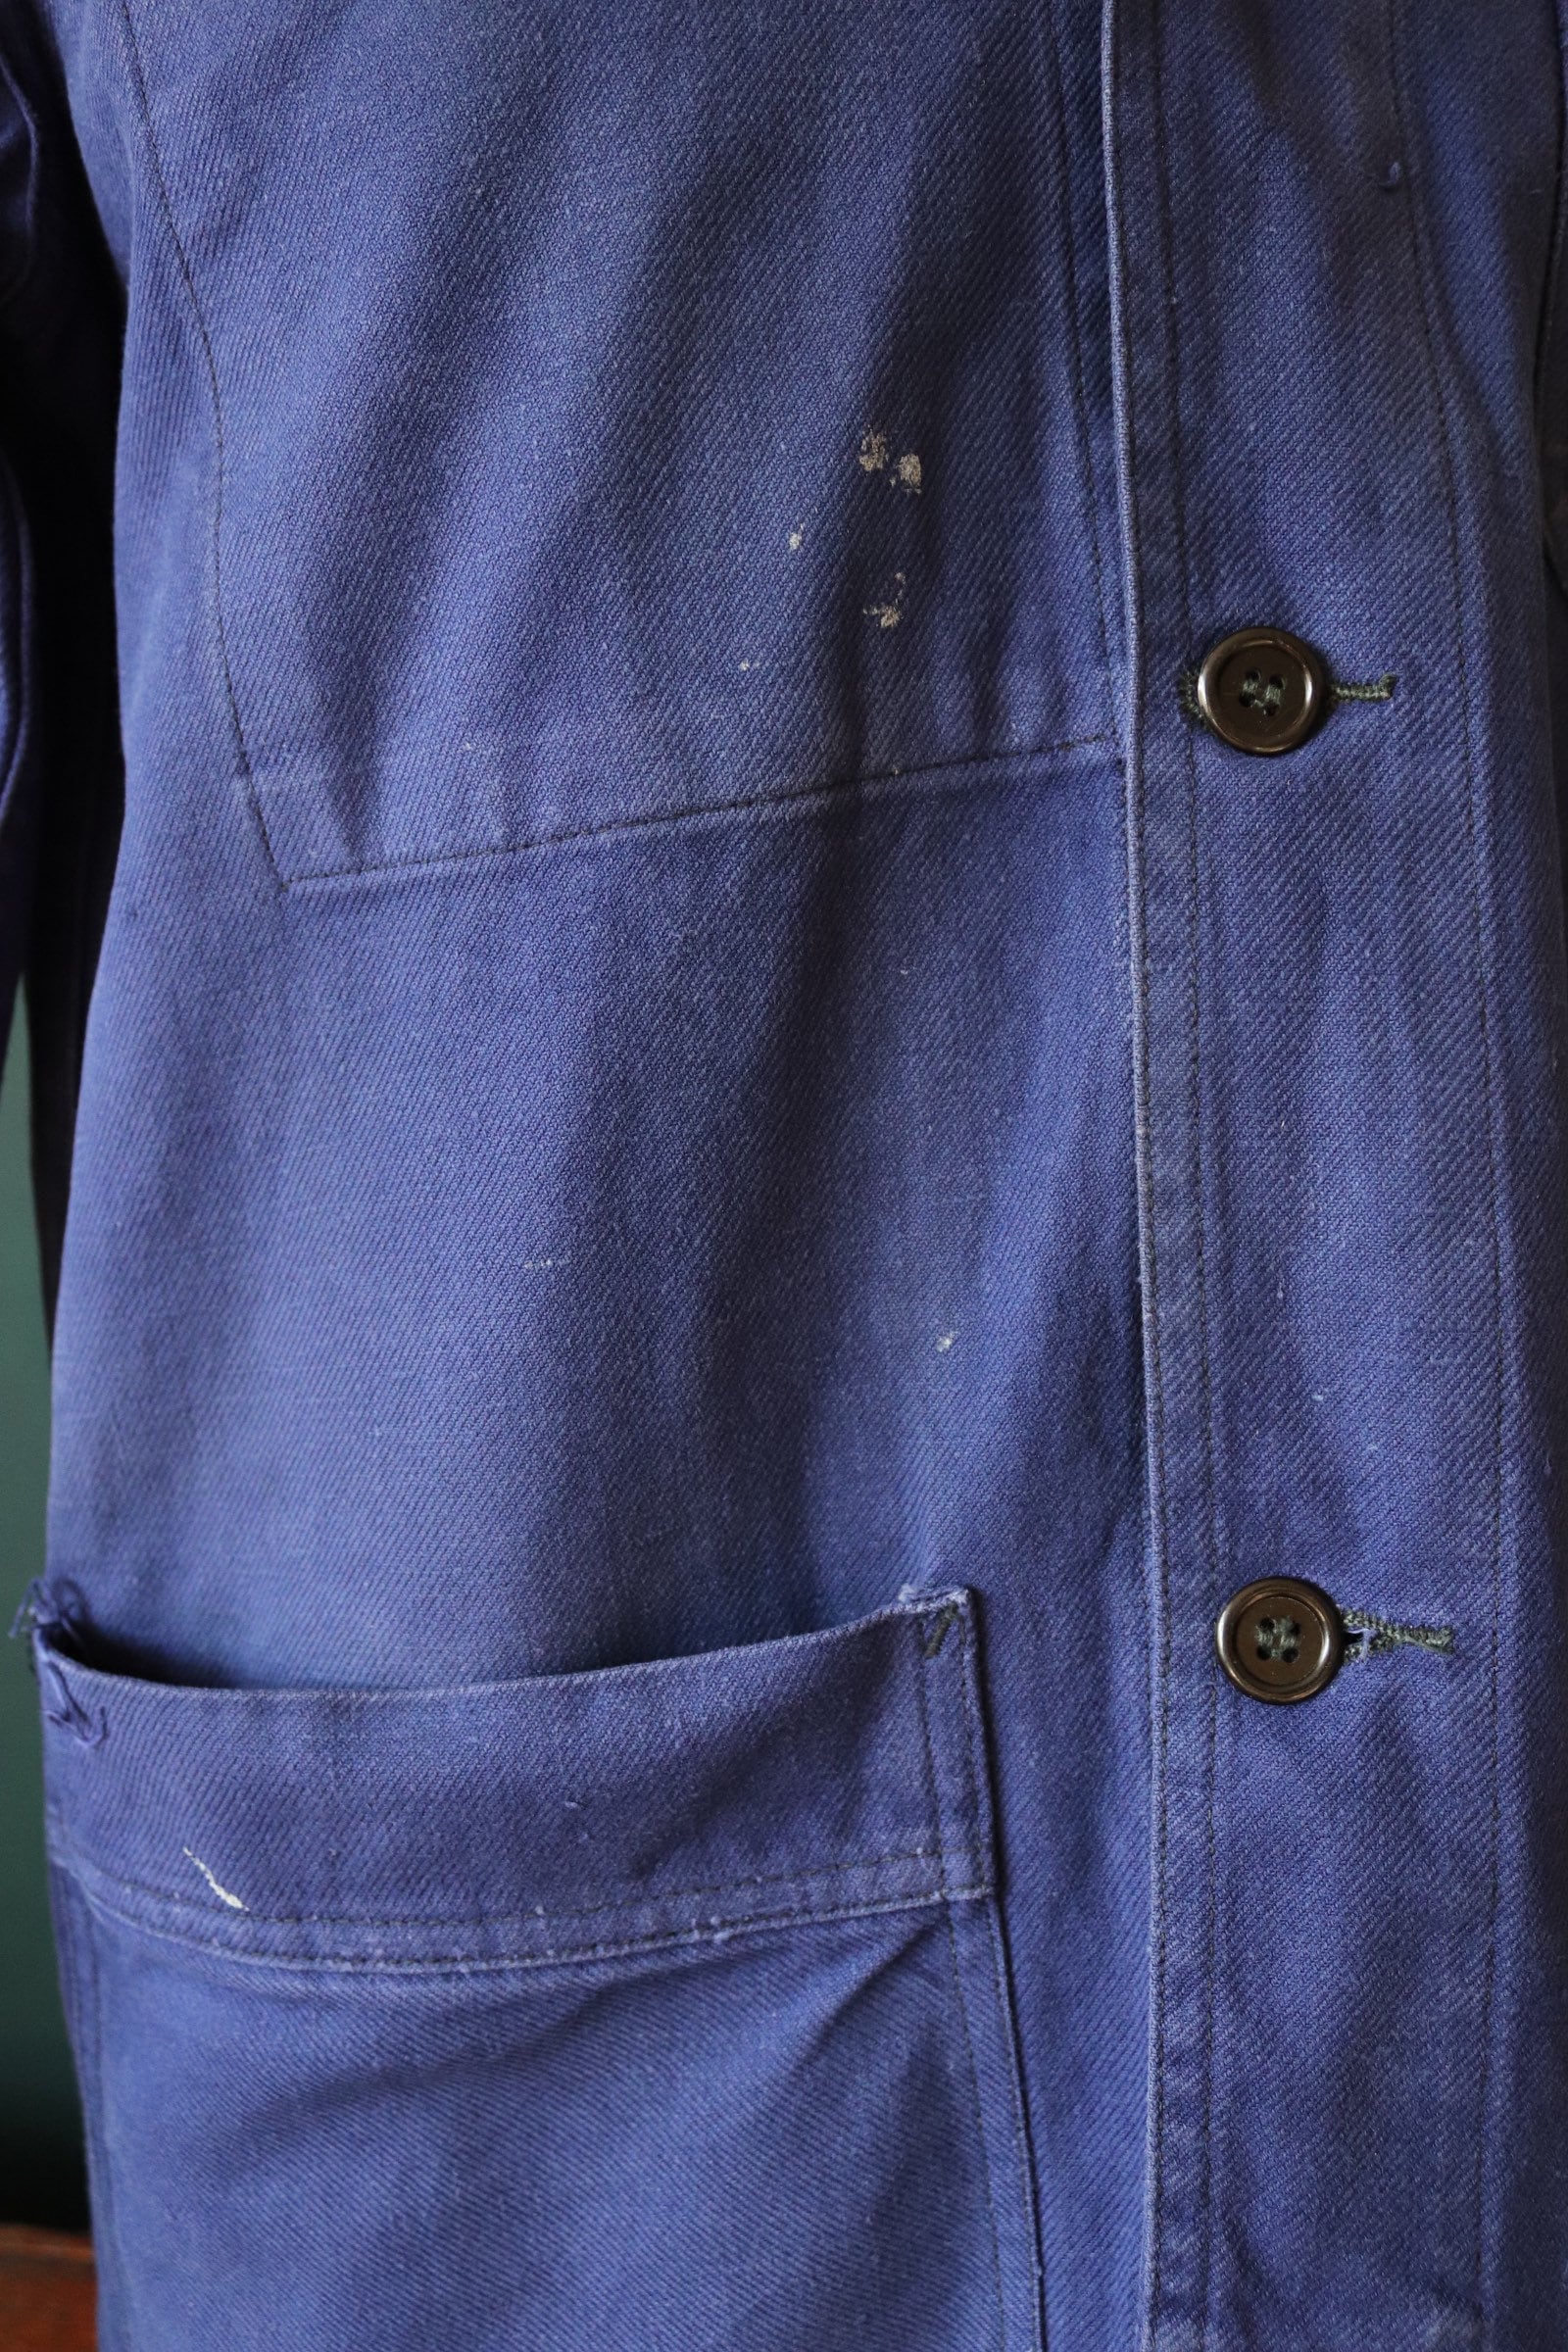 Vintage 1970s 70s French indigo blue bleu de travail work chore jacket ...